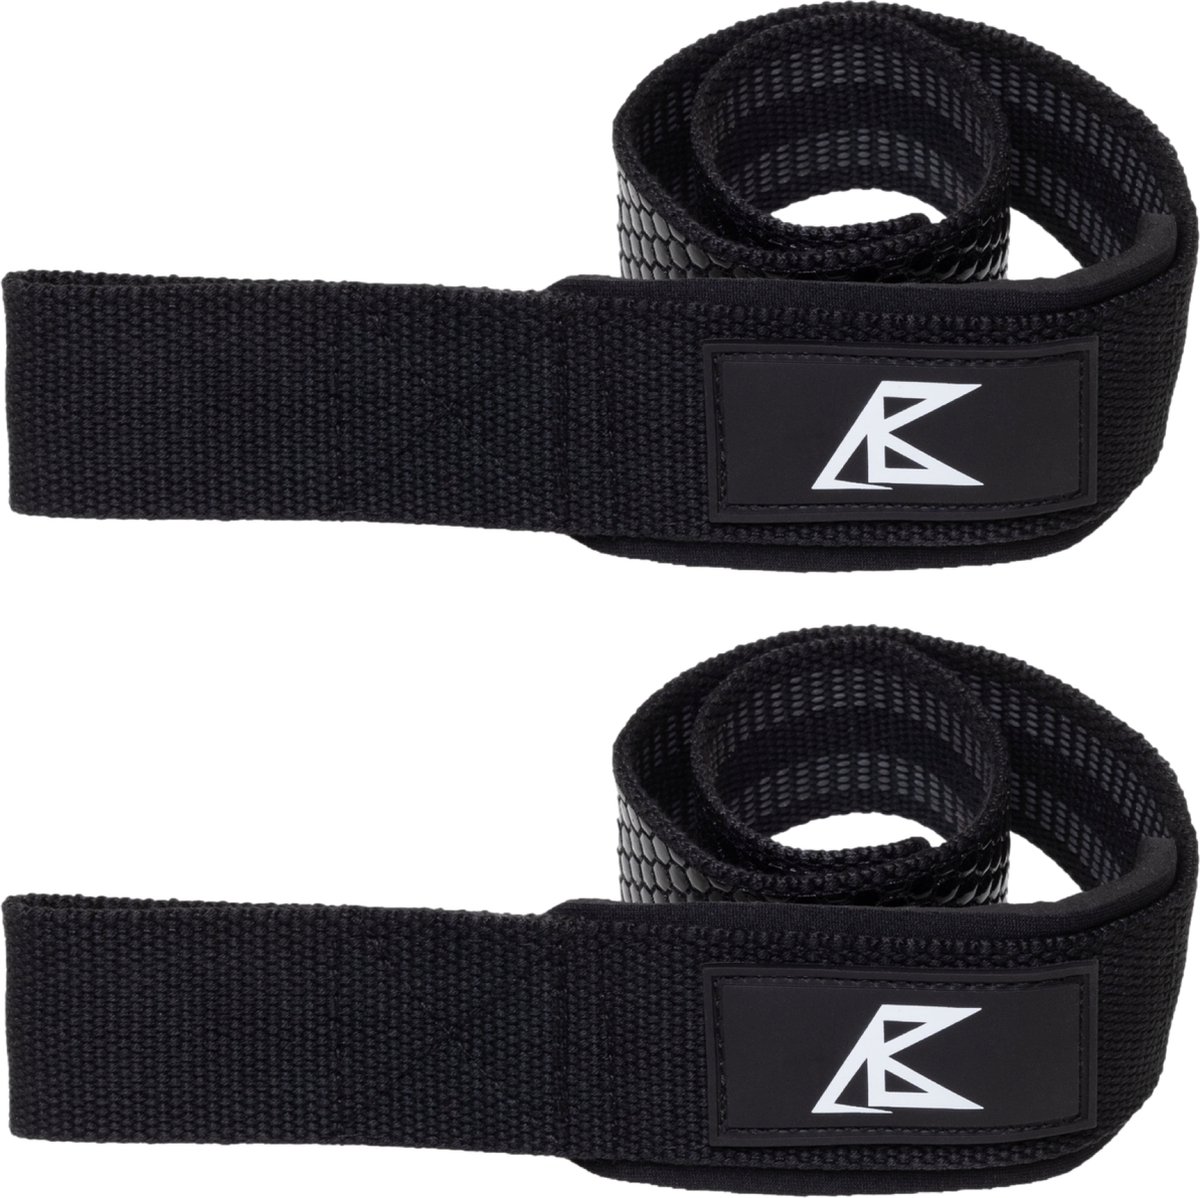 All Black Nutrition Lifting Straps - Fitness Wrist Wraps - Krachttraining Accessoires - Polssteun - Antislip